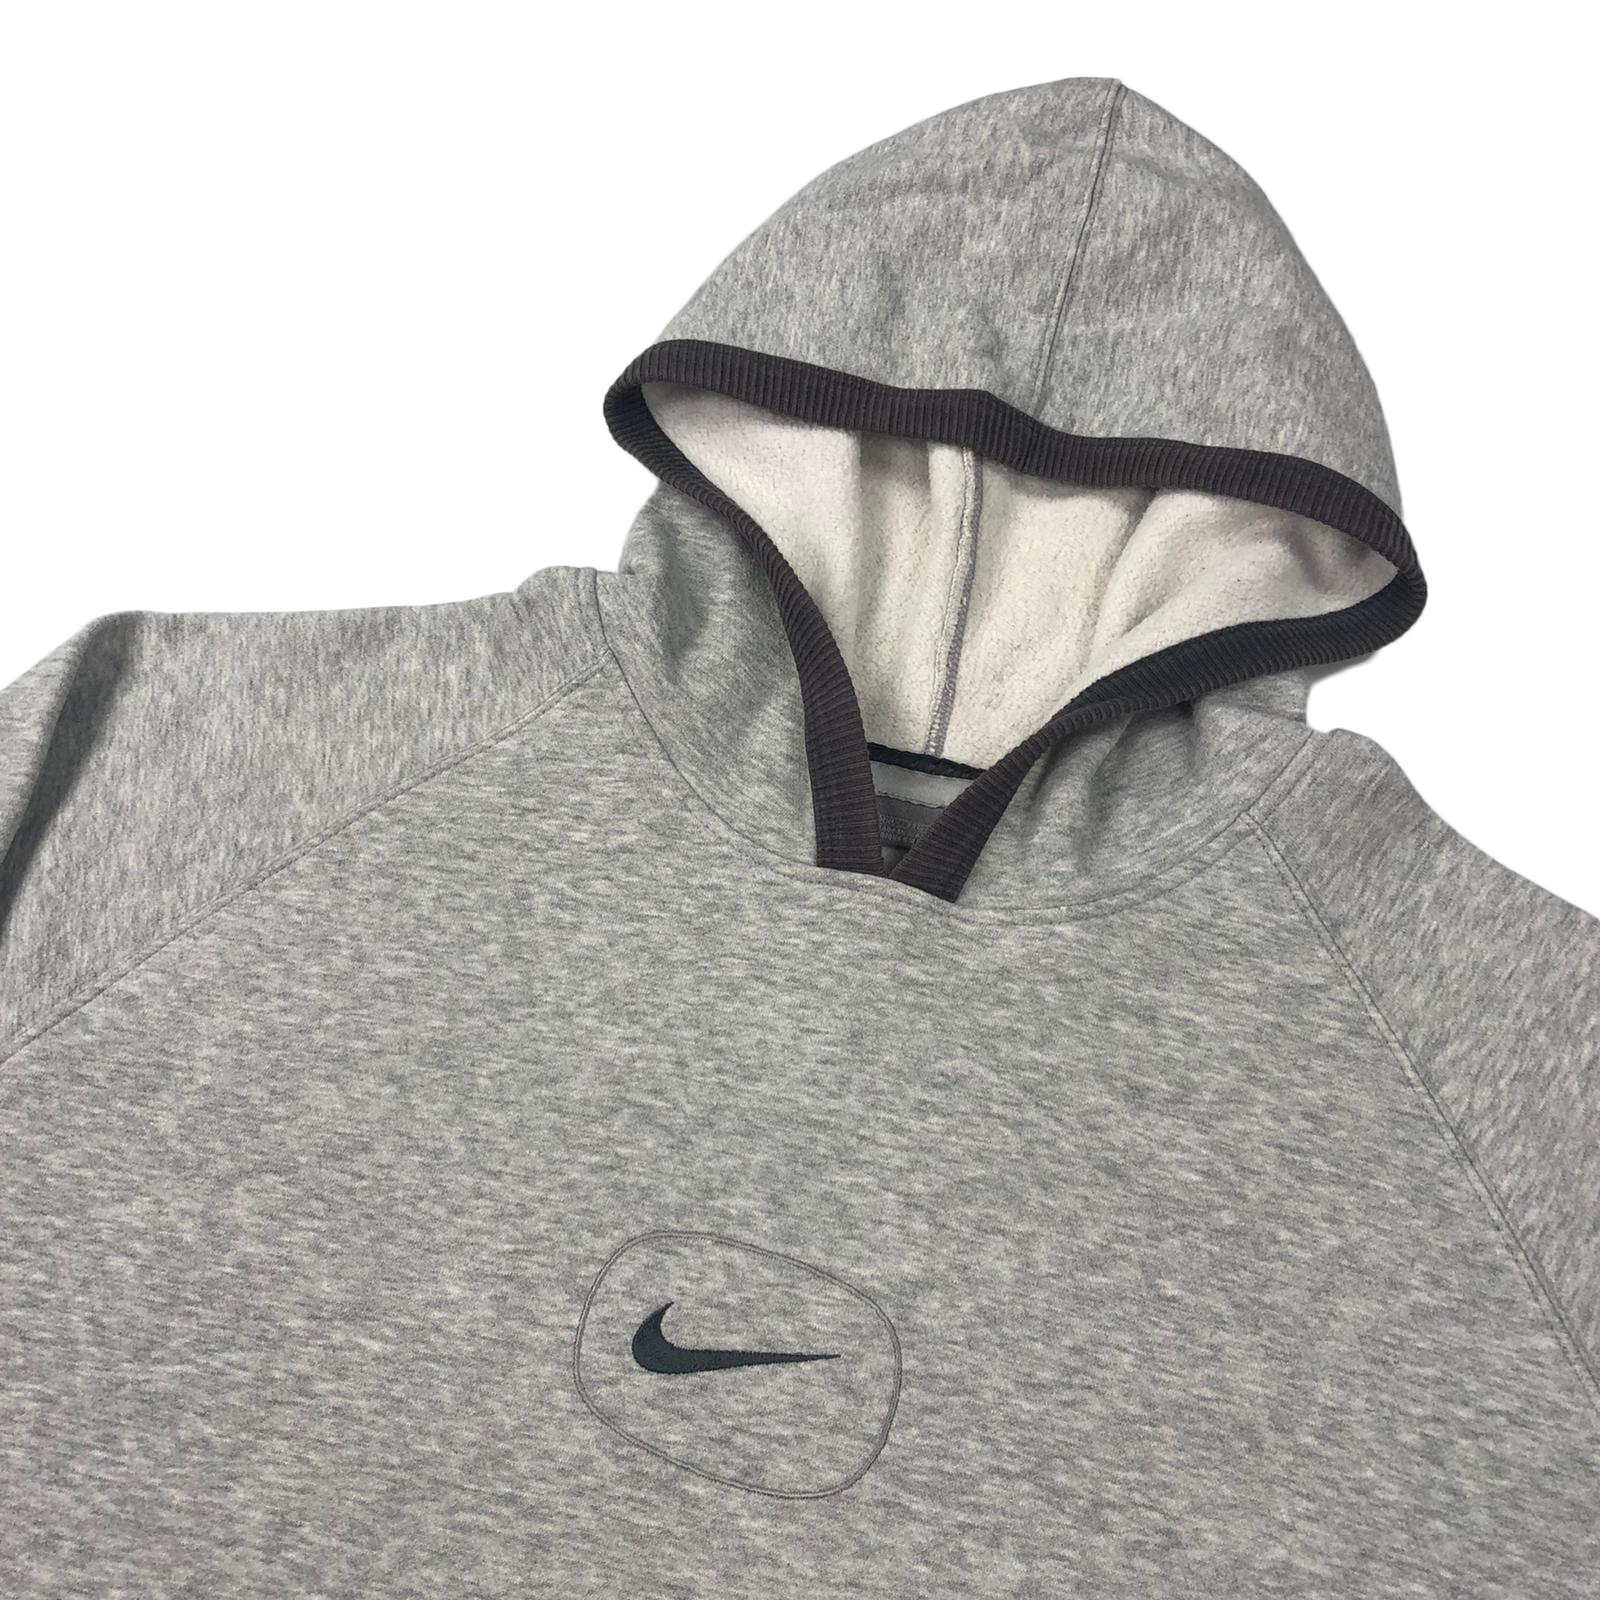 Nike centre swoosh hoodie